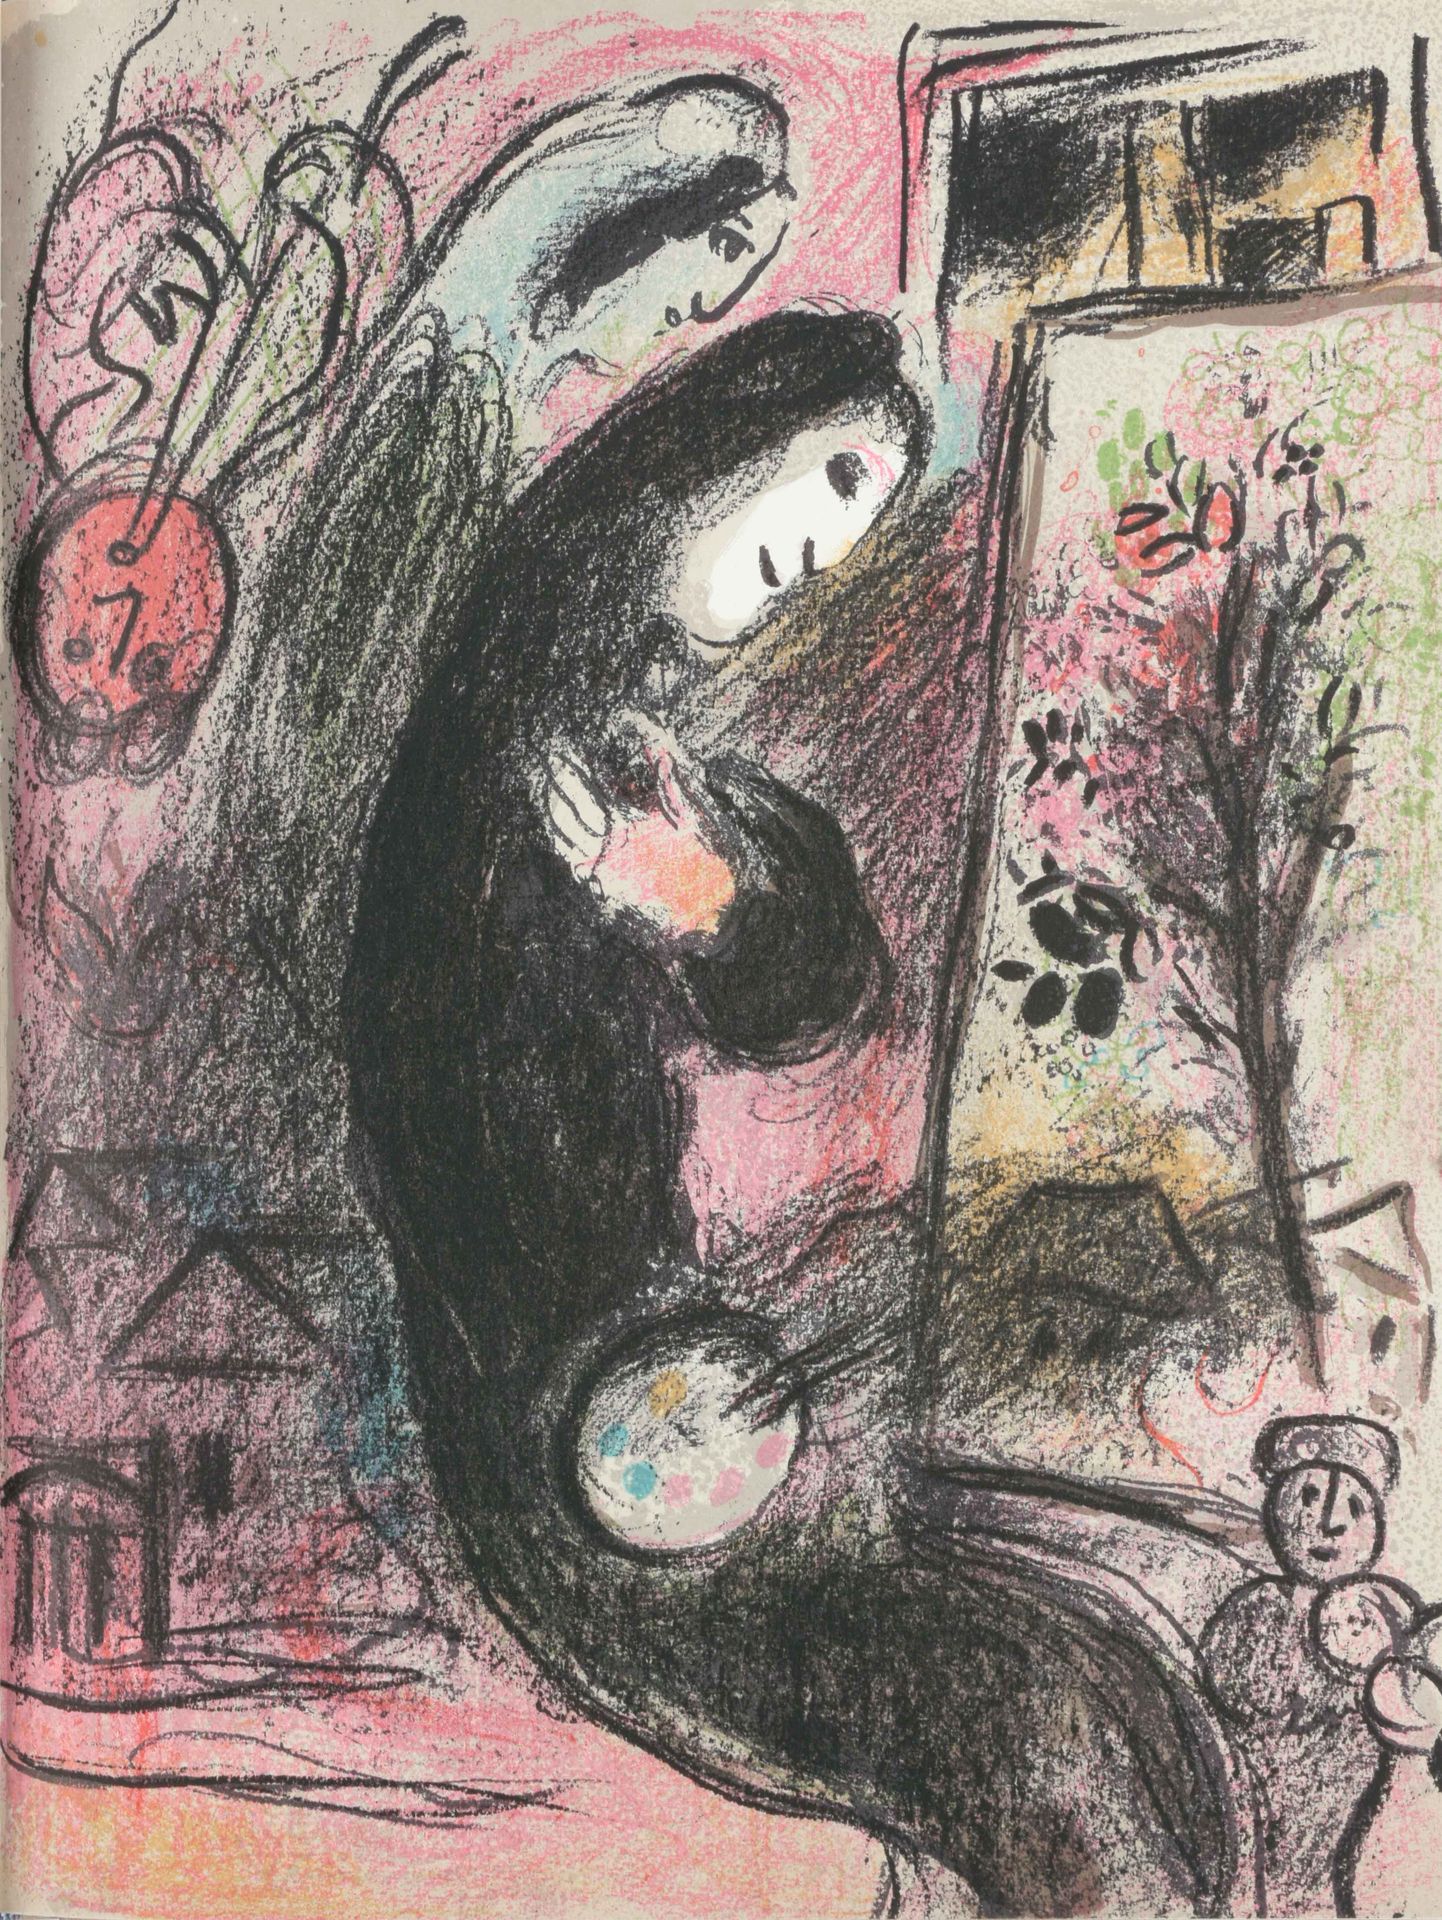 [CHAGALL] MOURLOT, Fernand Litografía de Chagall Volumen II - 1957-1962

In-4°, &hellip;